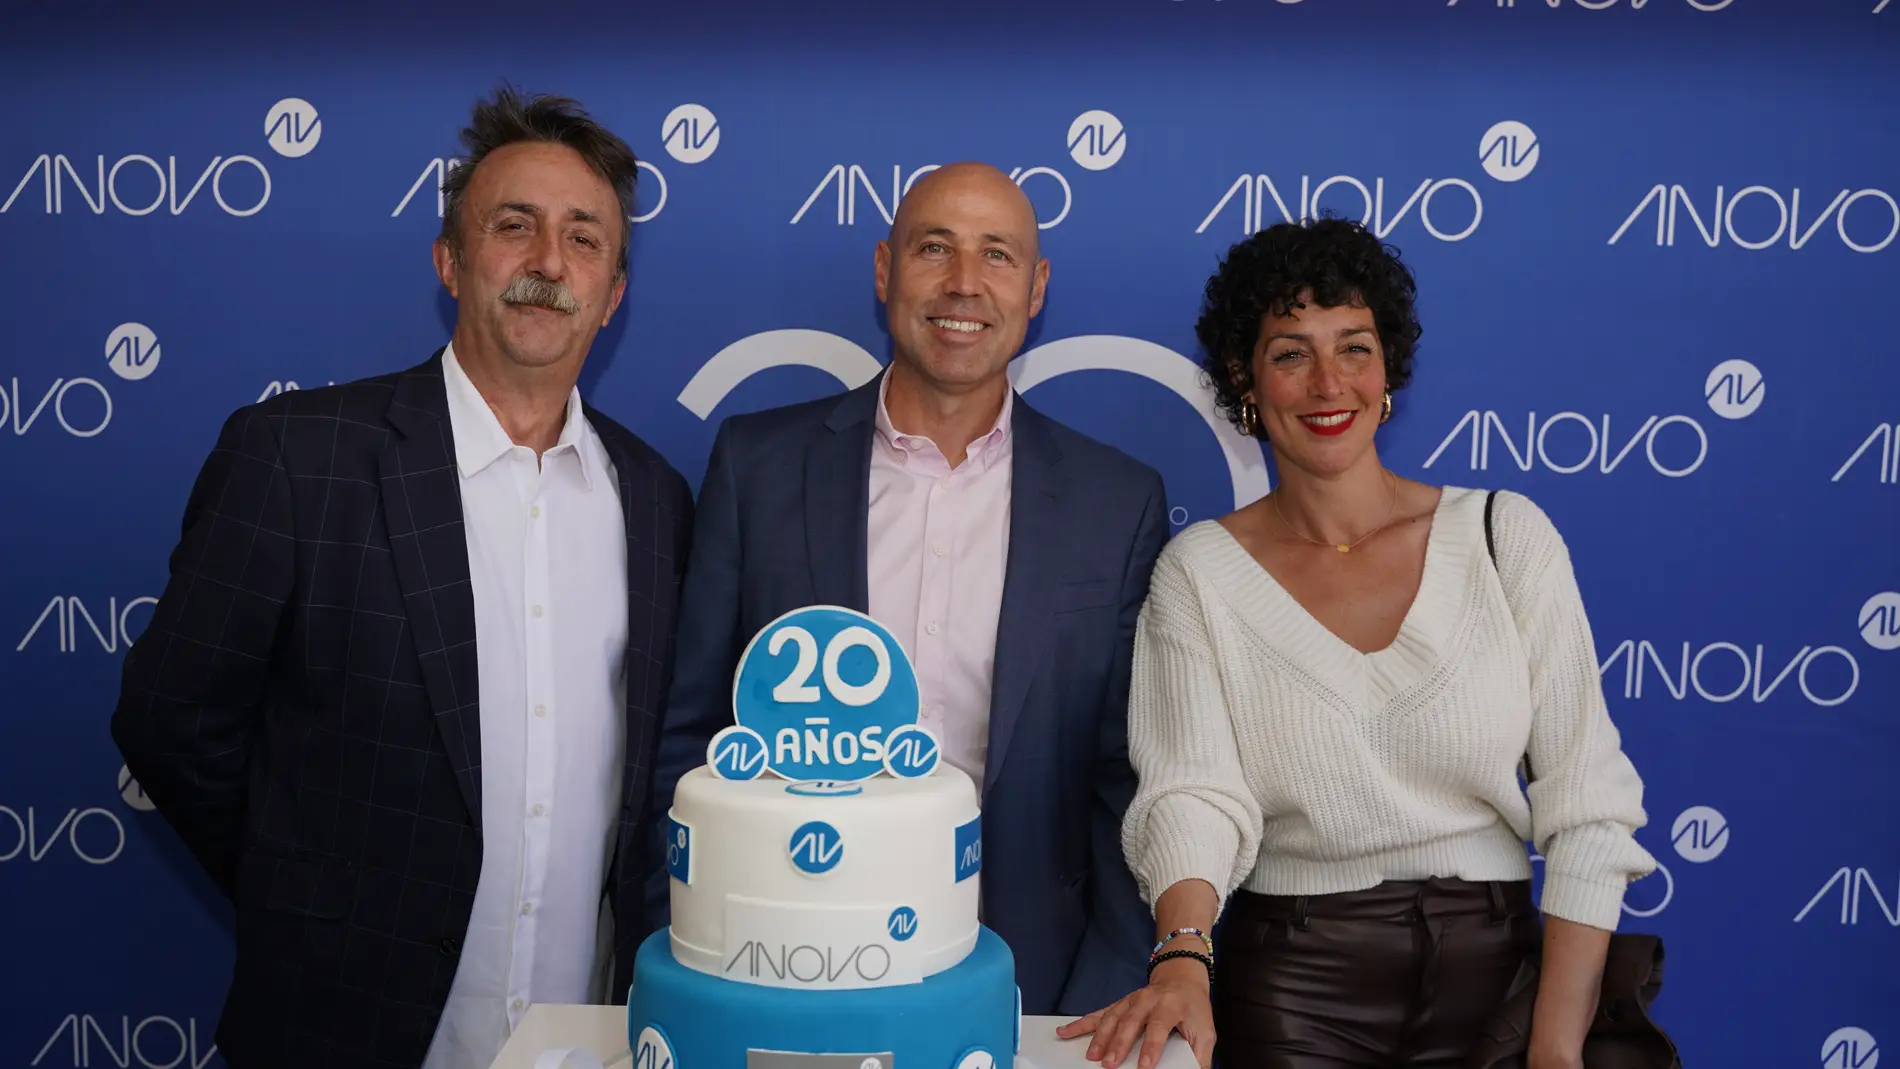 ANOVO celebra su 20 Aniversario